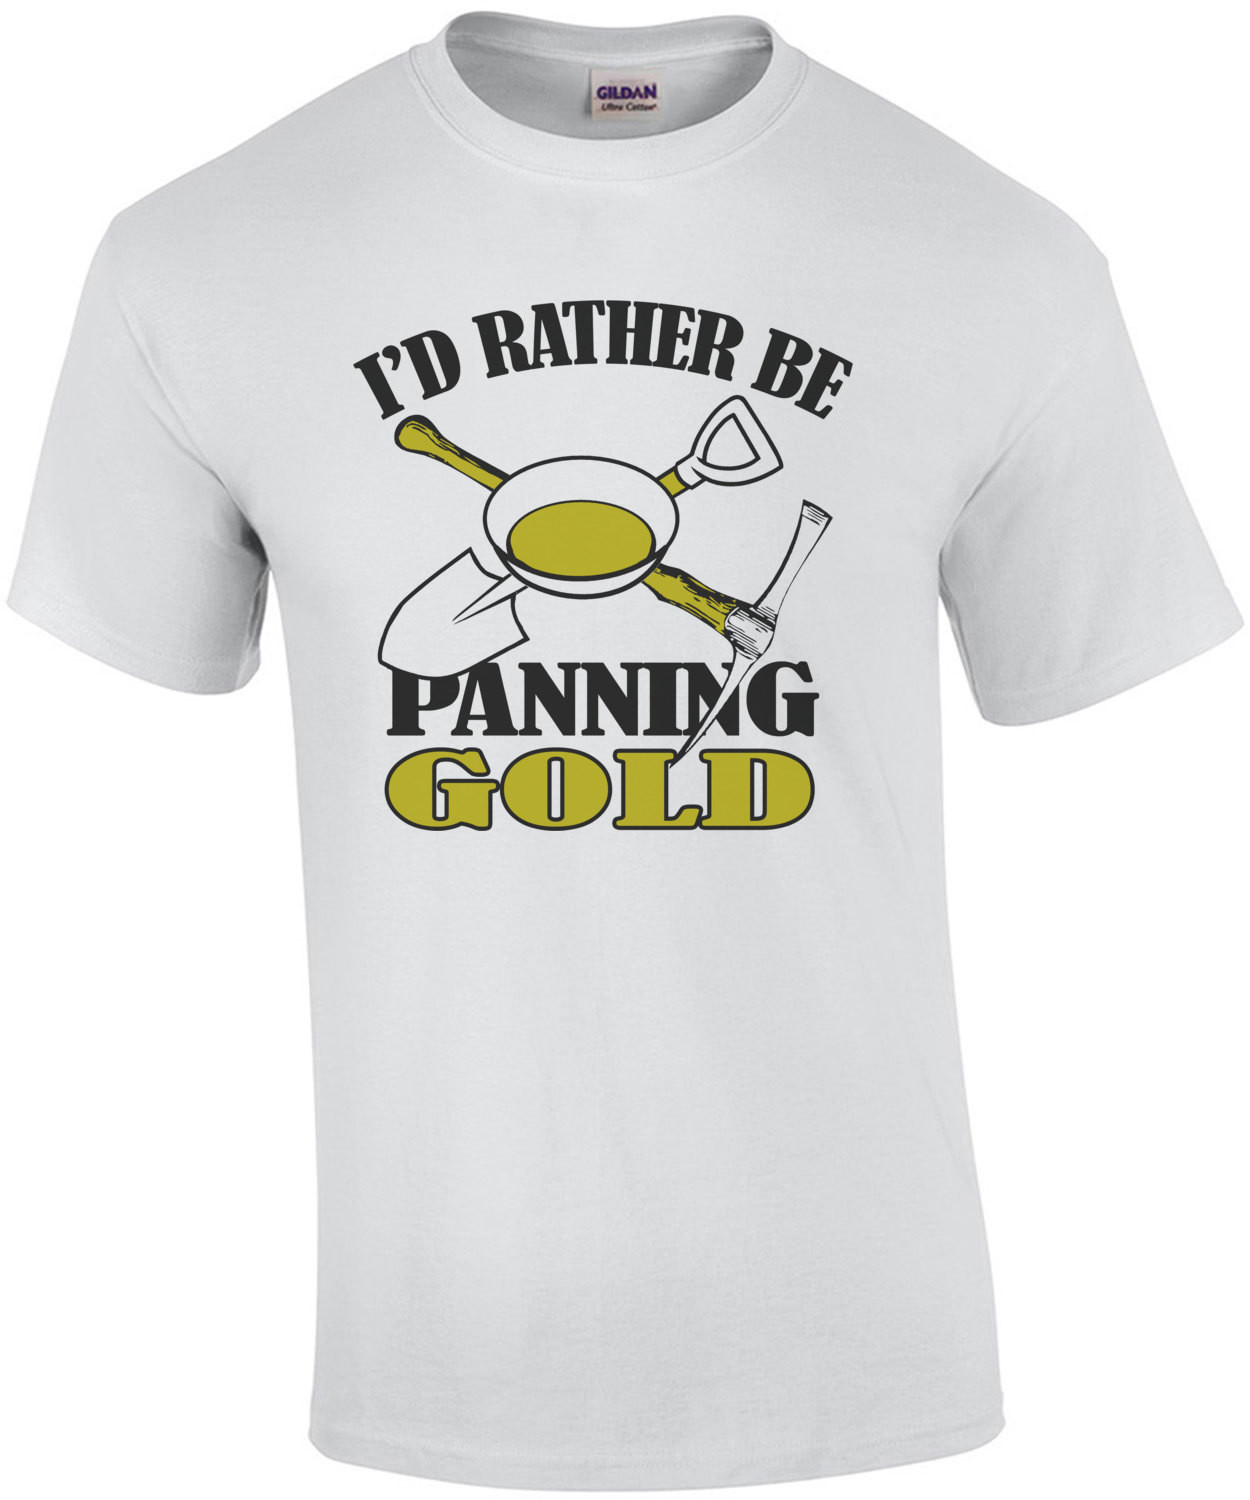 I'd Rather Be Panning Gold T-Shirt